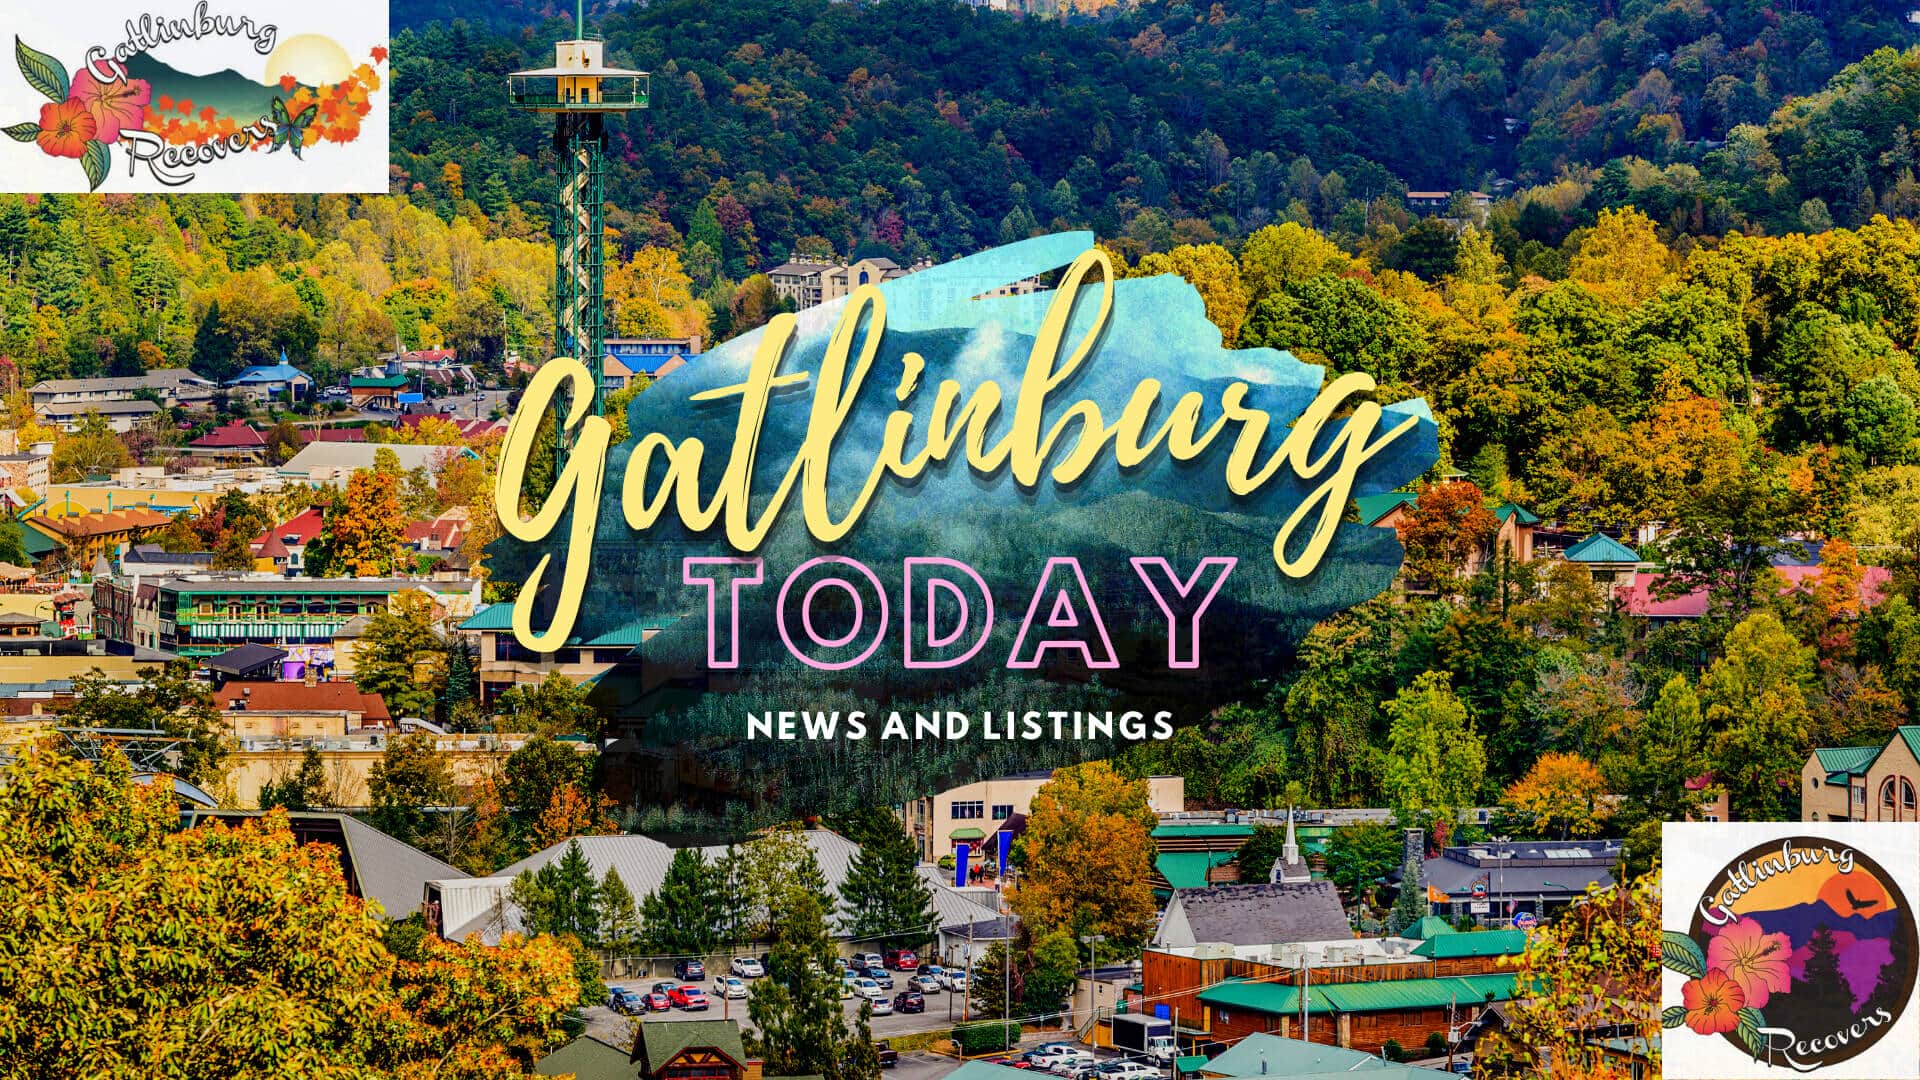 Gatlinburg News, Upcoming Events, and Listings